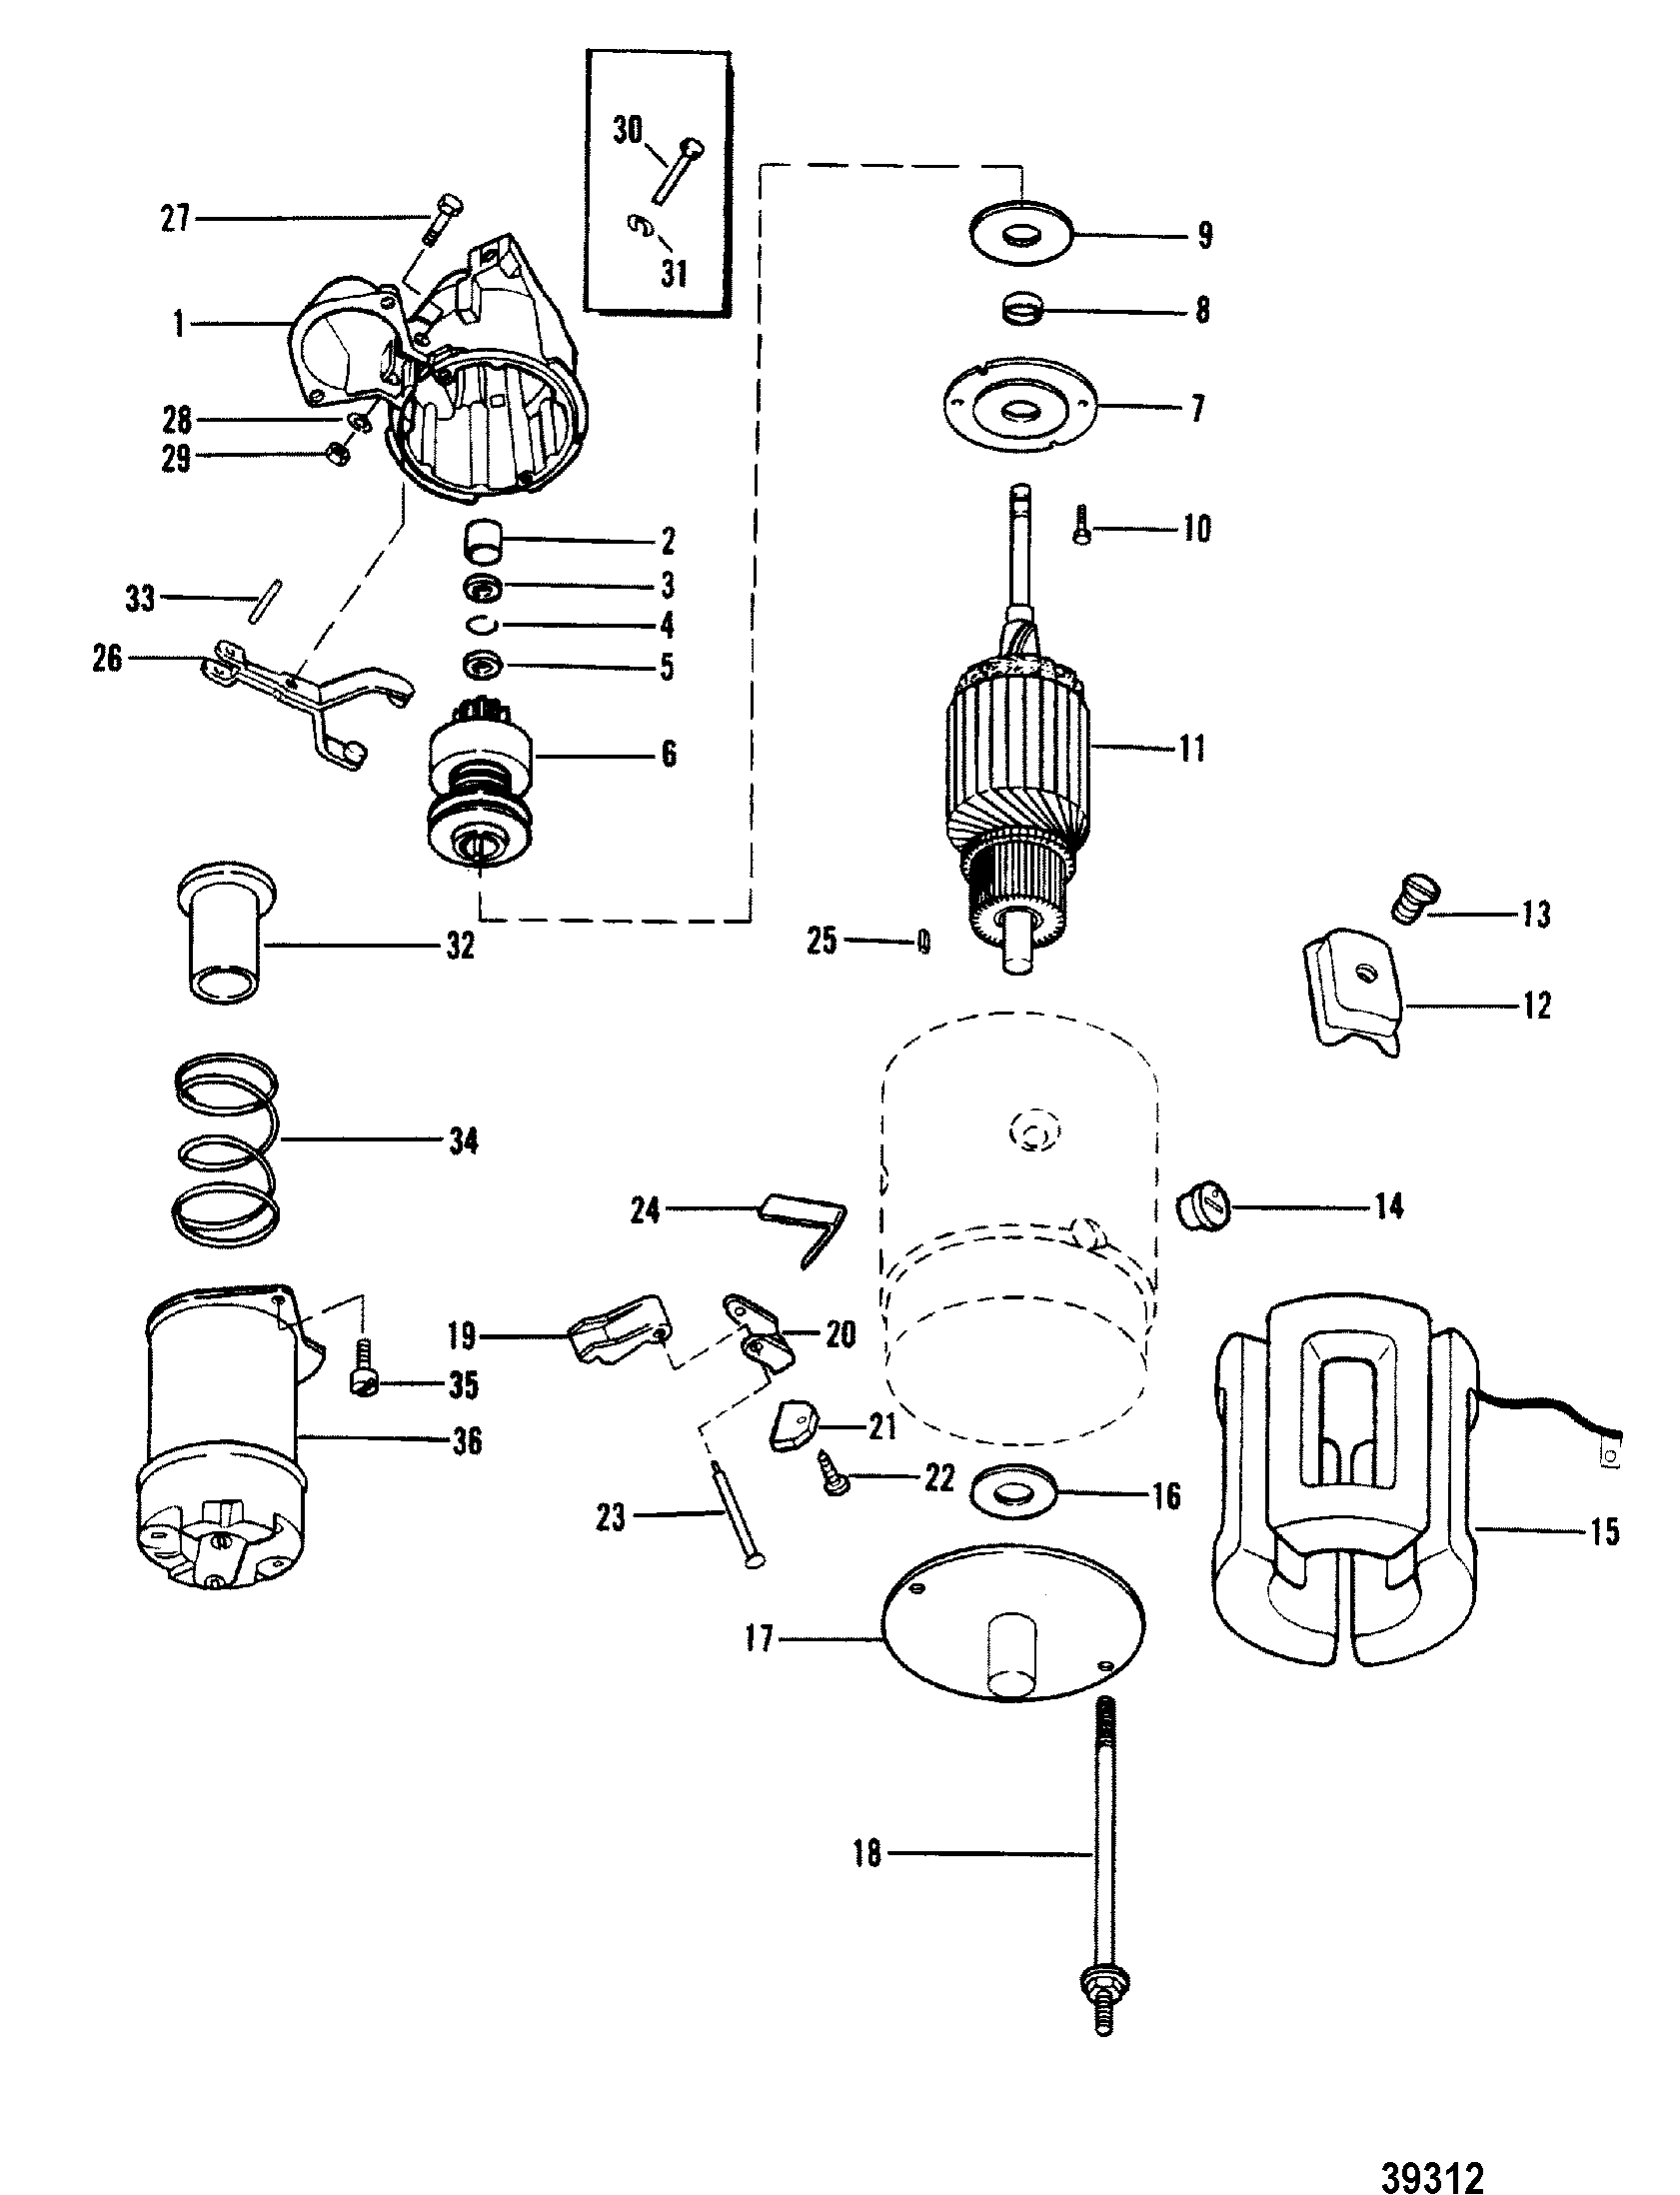 STARTER MOTOR(USE WITH 12-3/4 FLYWHEEL)